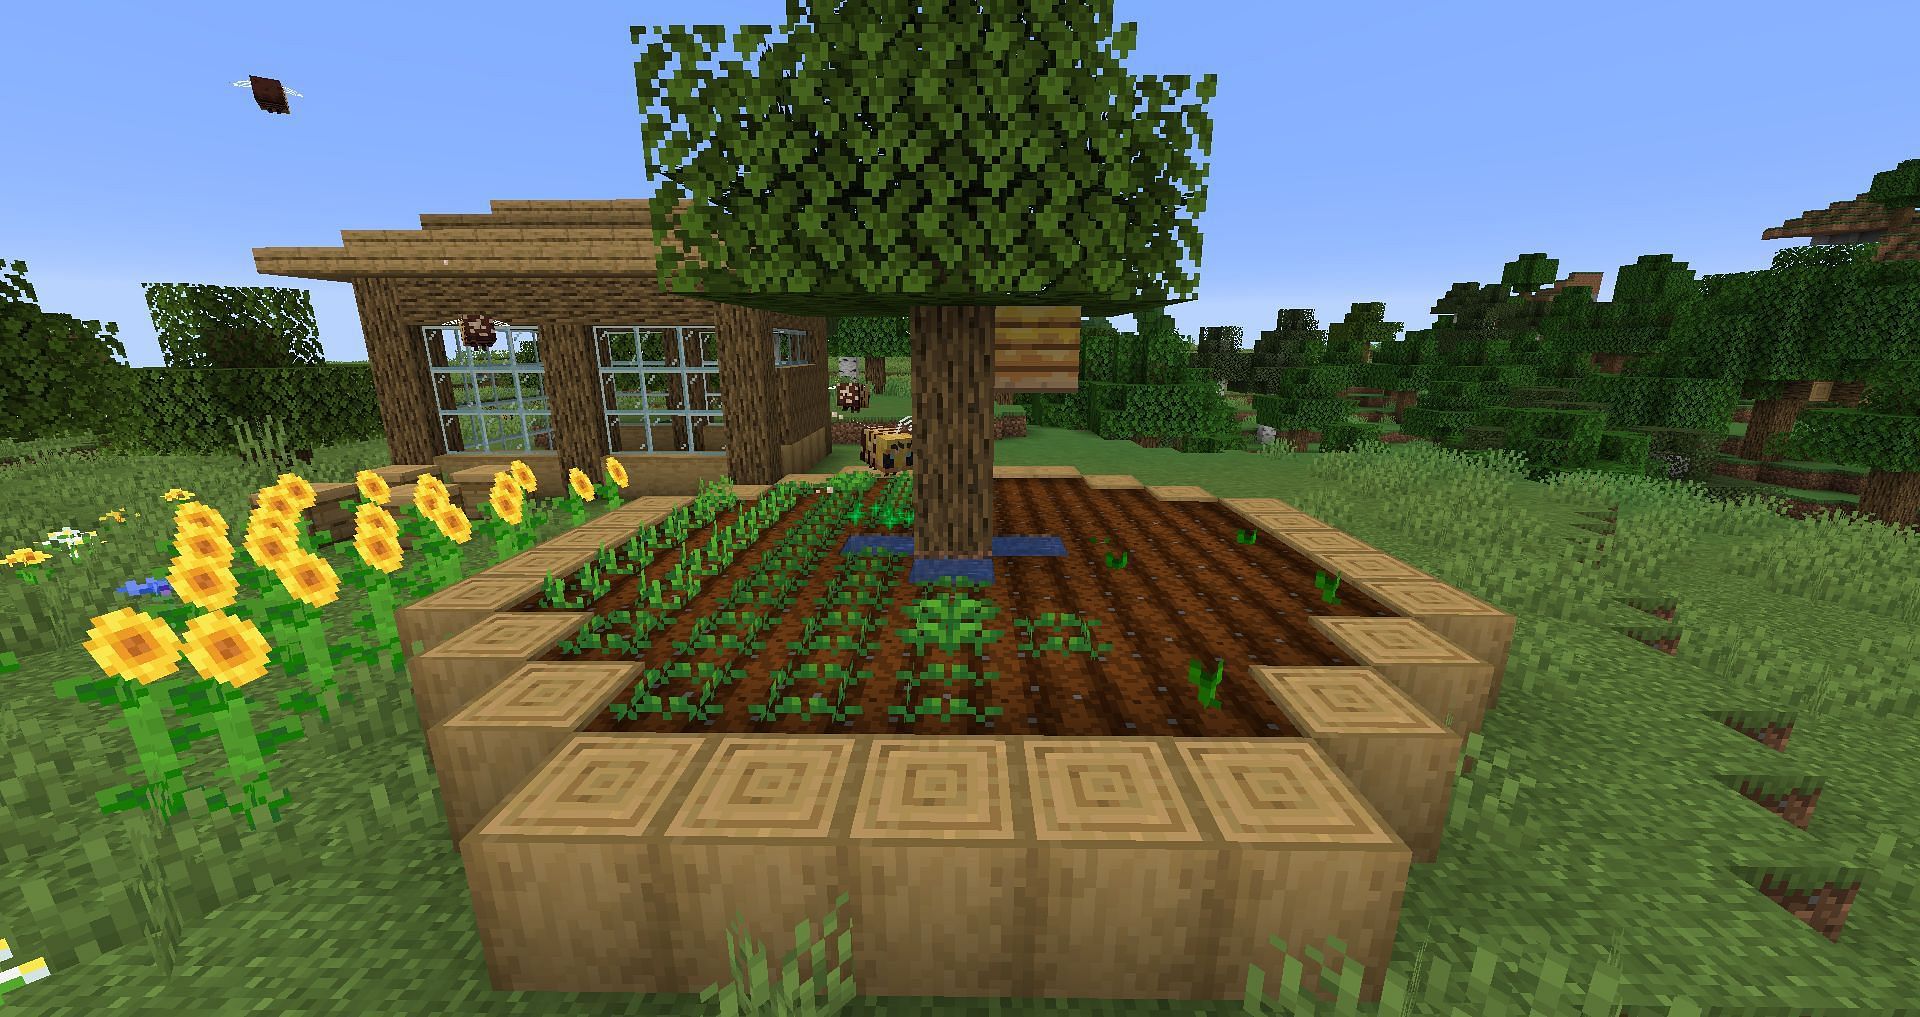 Bees fertilizing plants in a farm (Image via Minecraft Wiki)